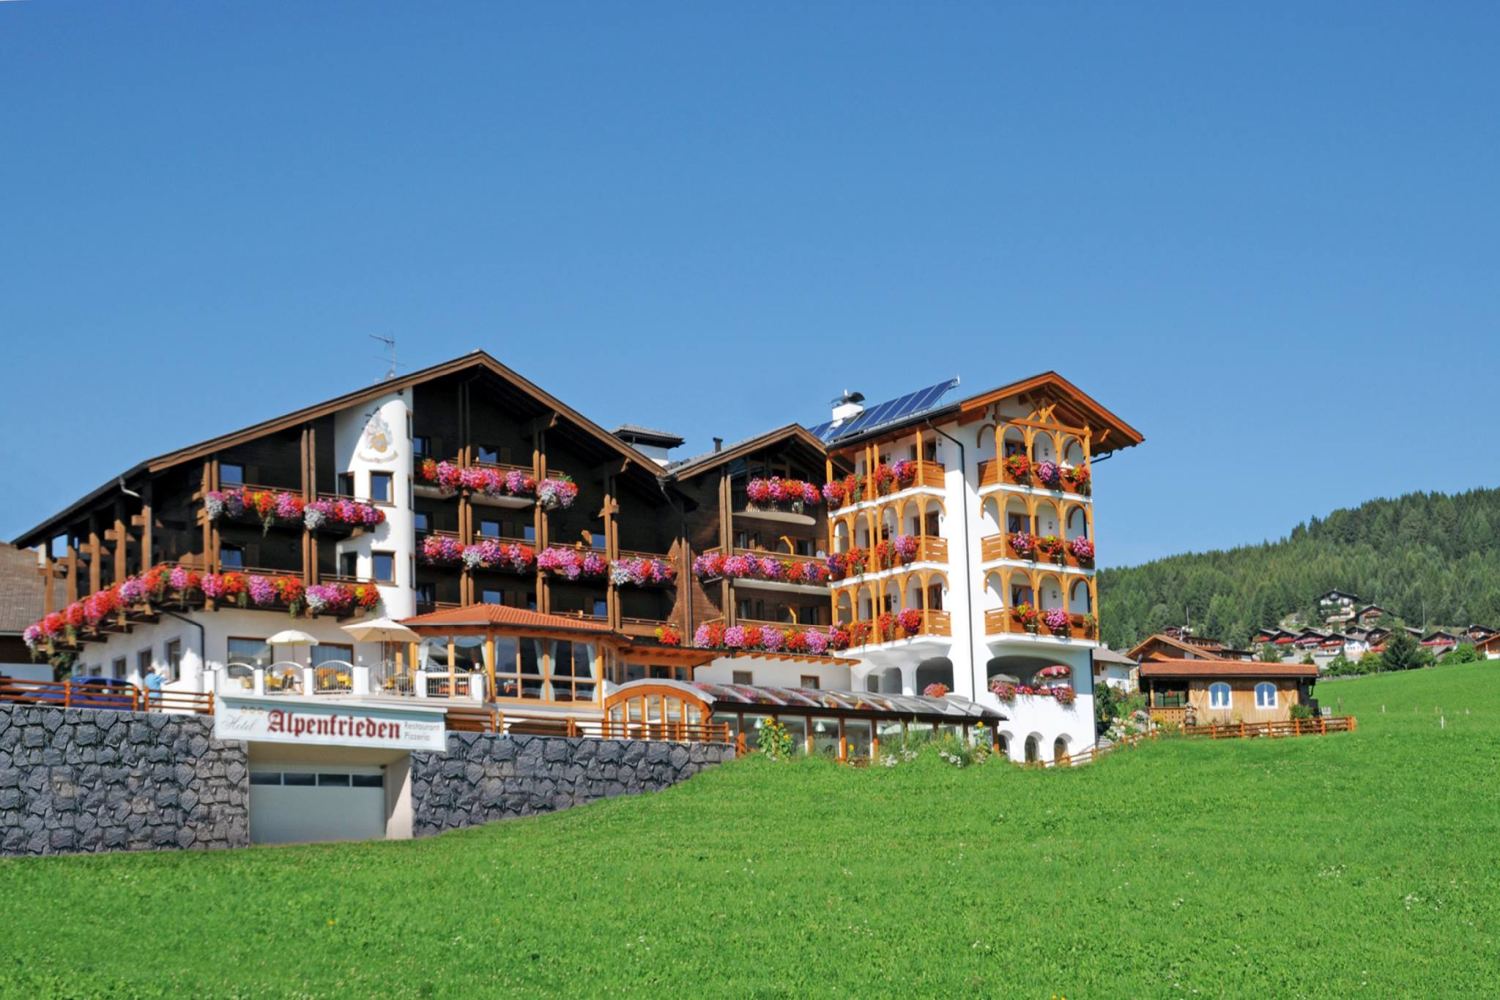 Hotel Alpenfrieden Maranza, South Tyrol - Italy